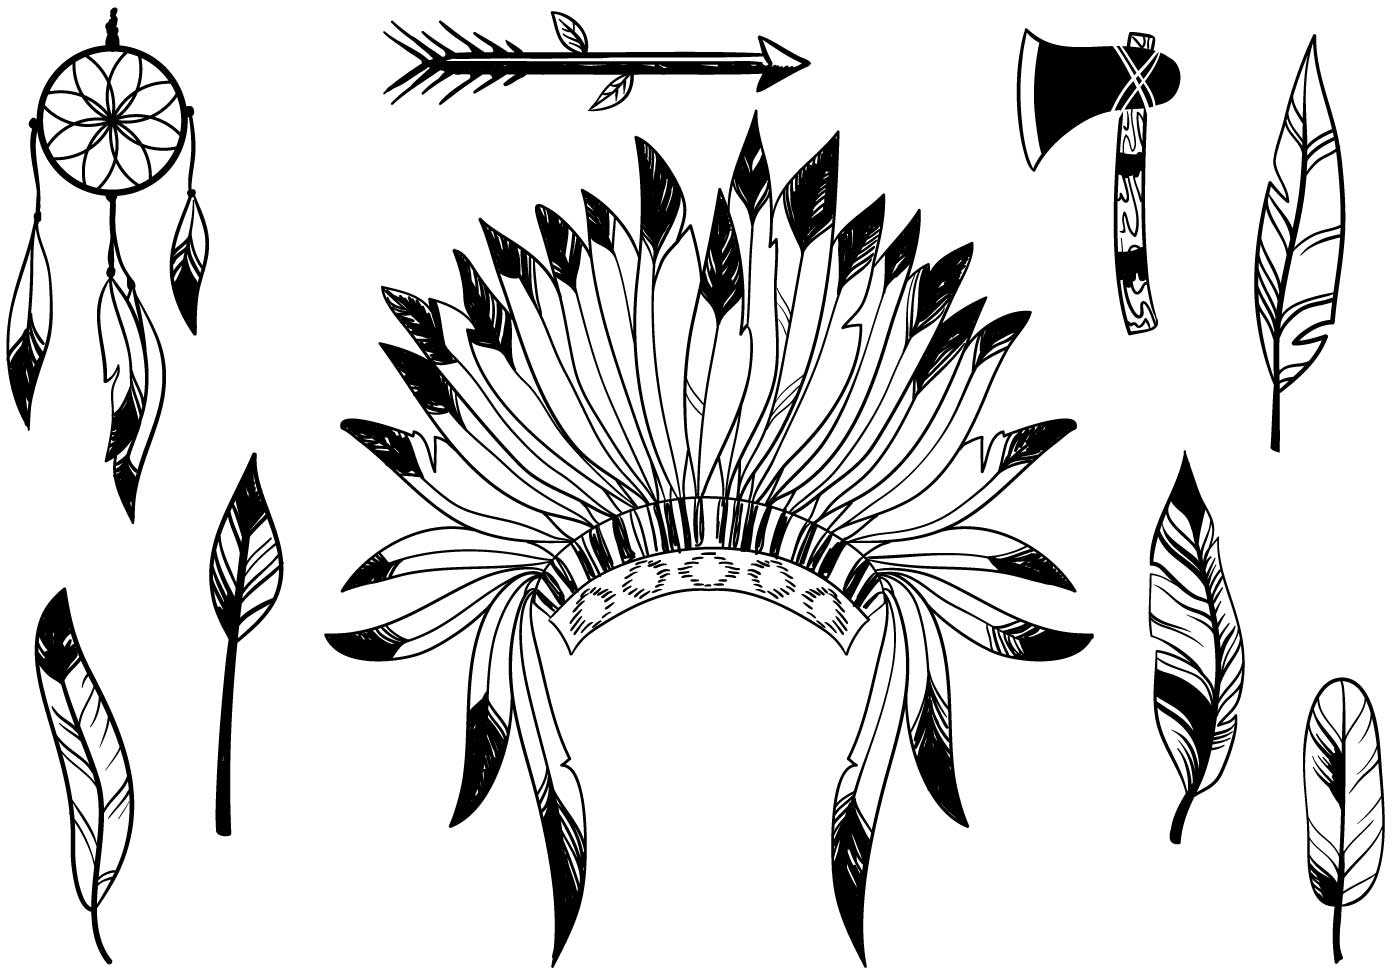 Free Native American Vectors - Download Free Vector Art, Stock Graphics